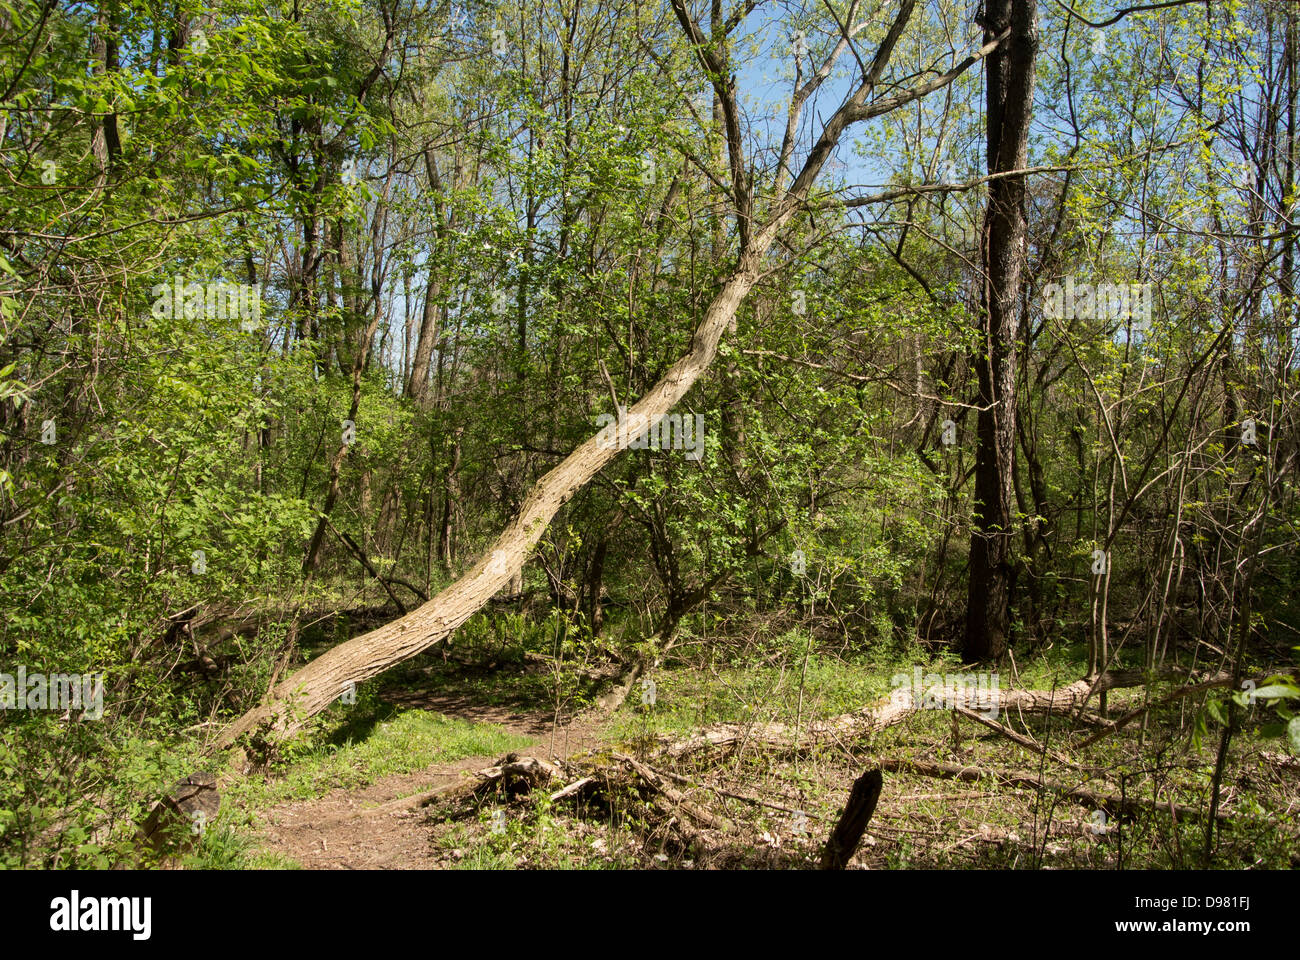 Fallen trees in park. Stock Photo